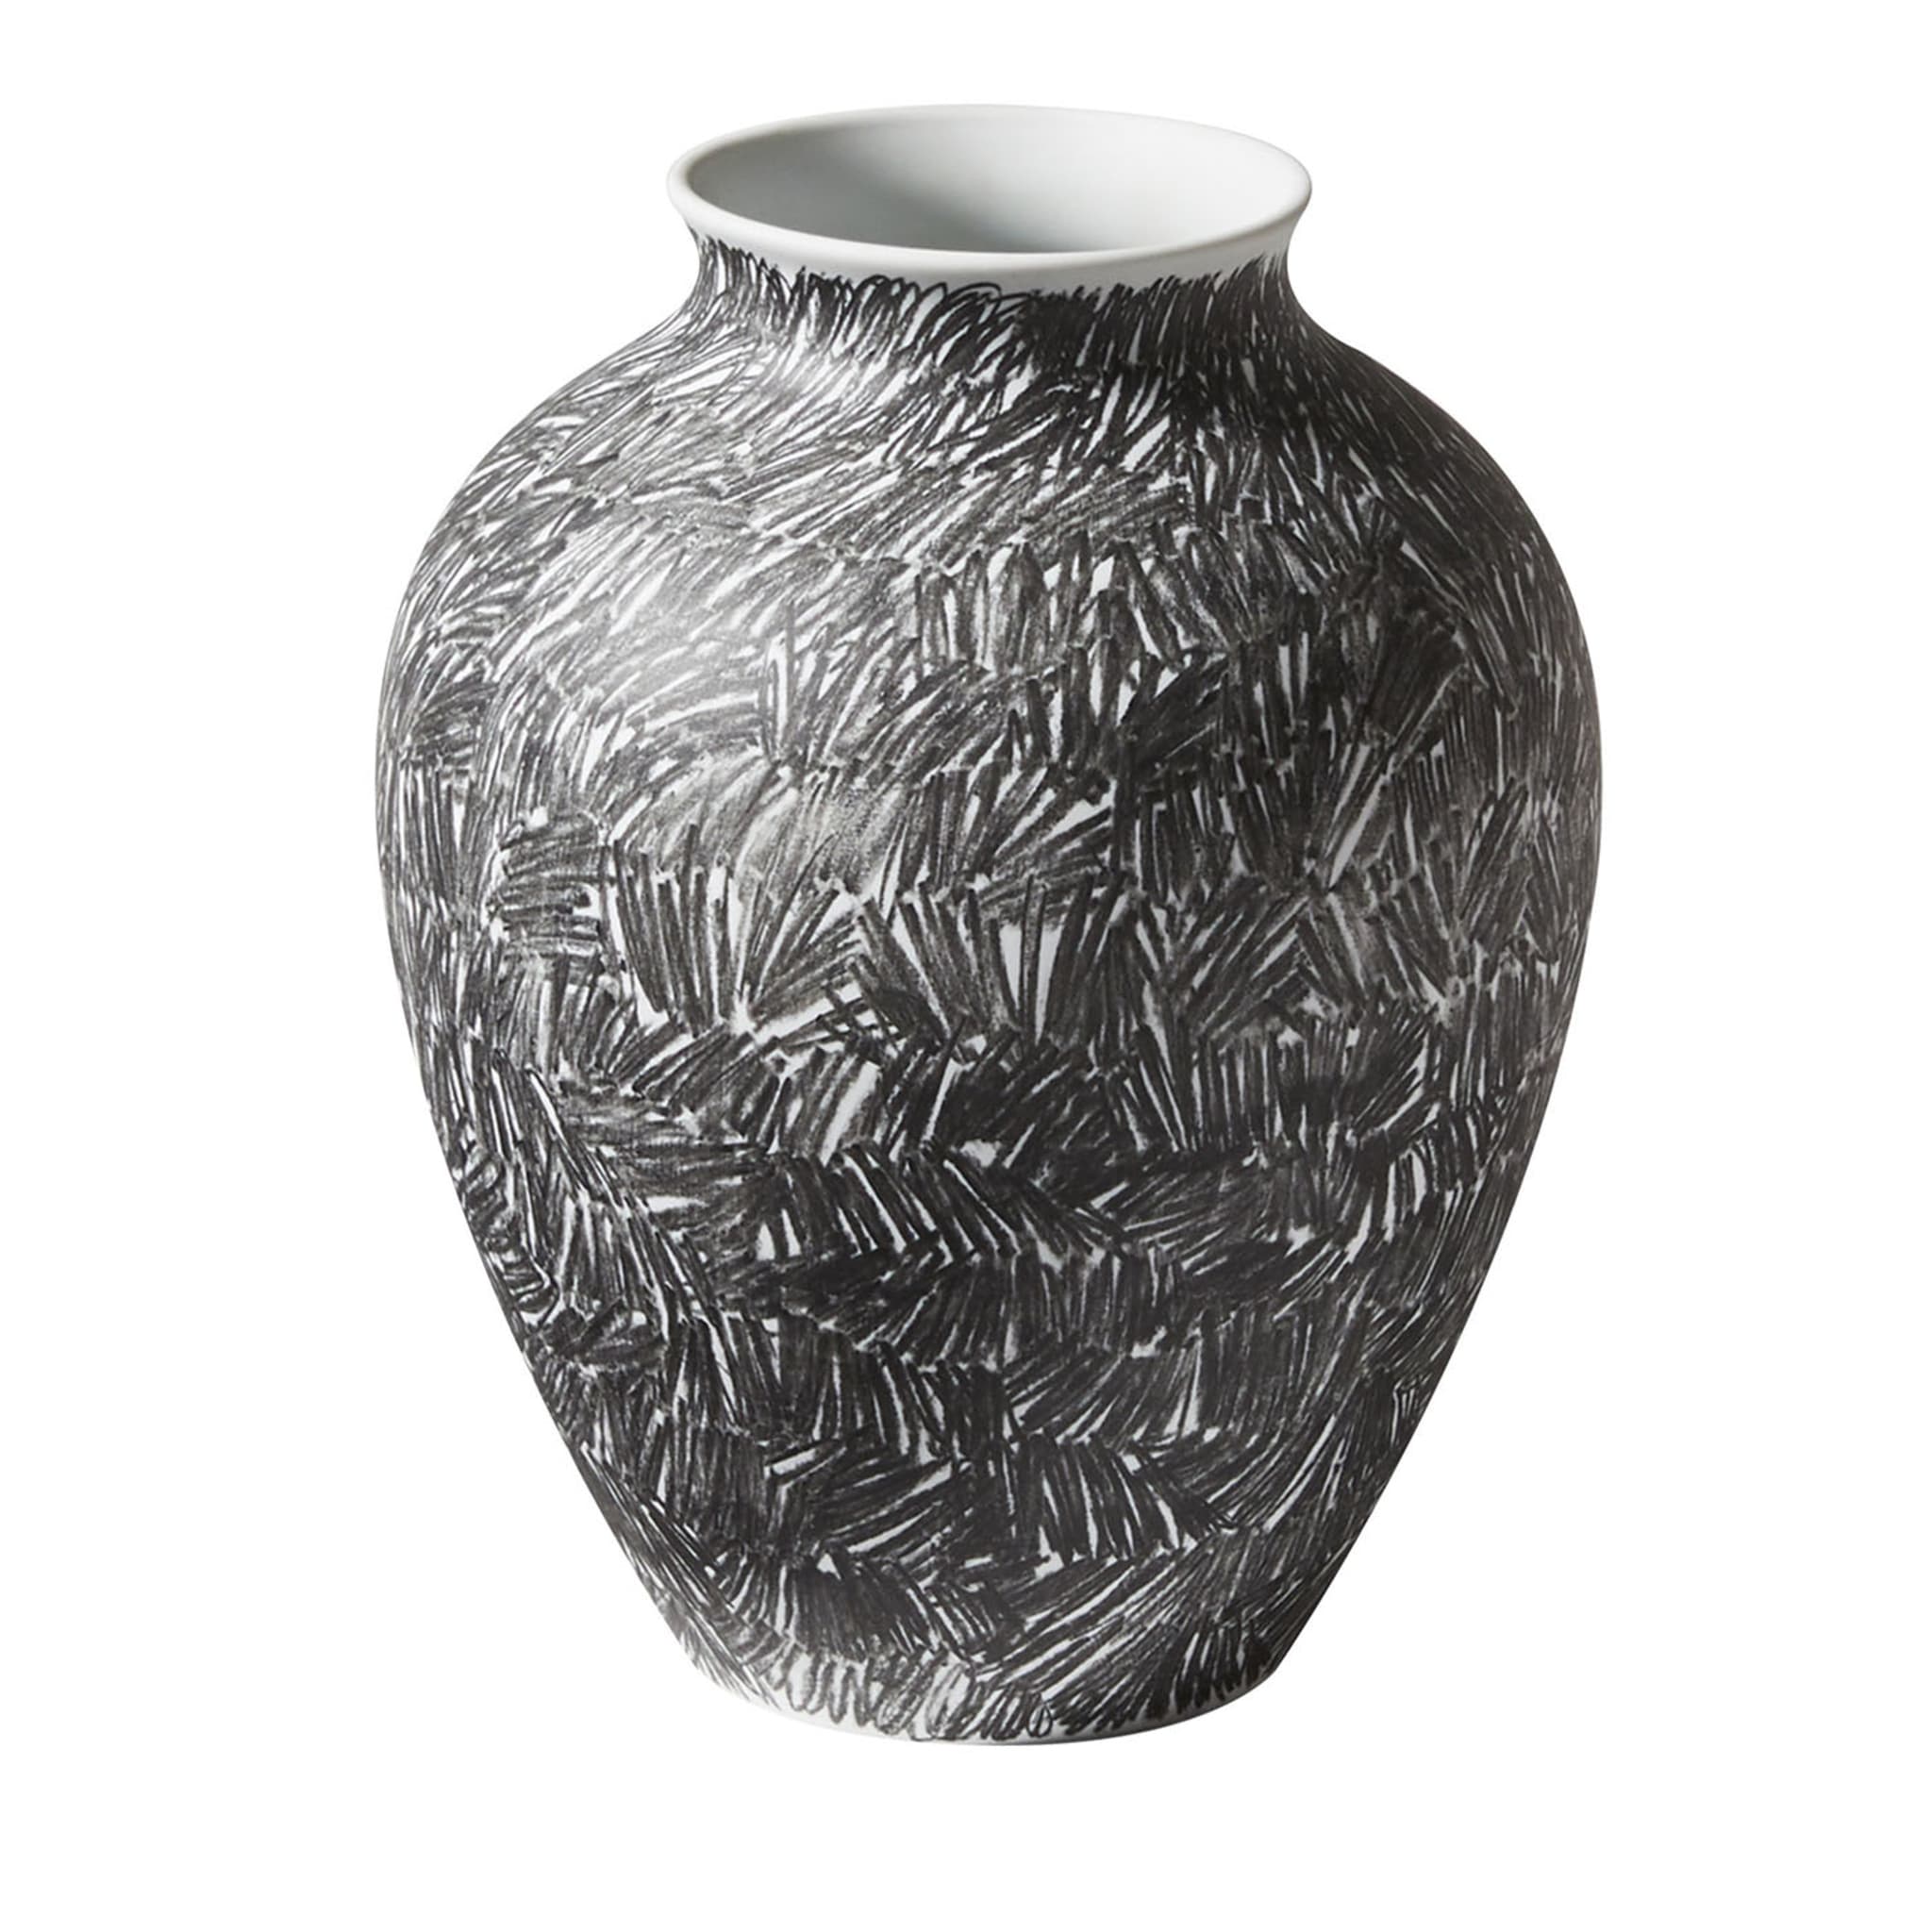 Post Scriptum Black & White Bulging Vase by Formafantasma #1 - Main view